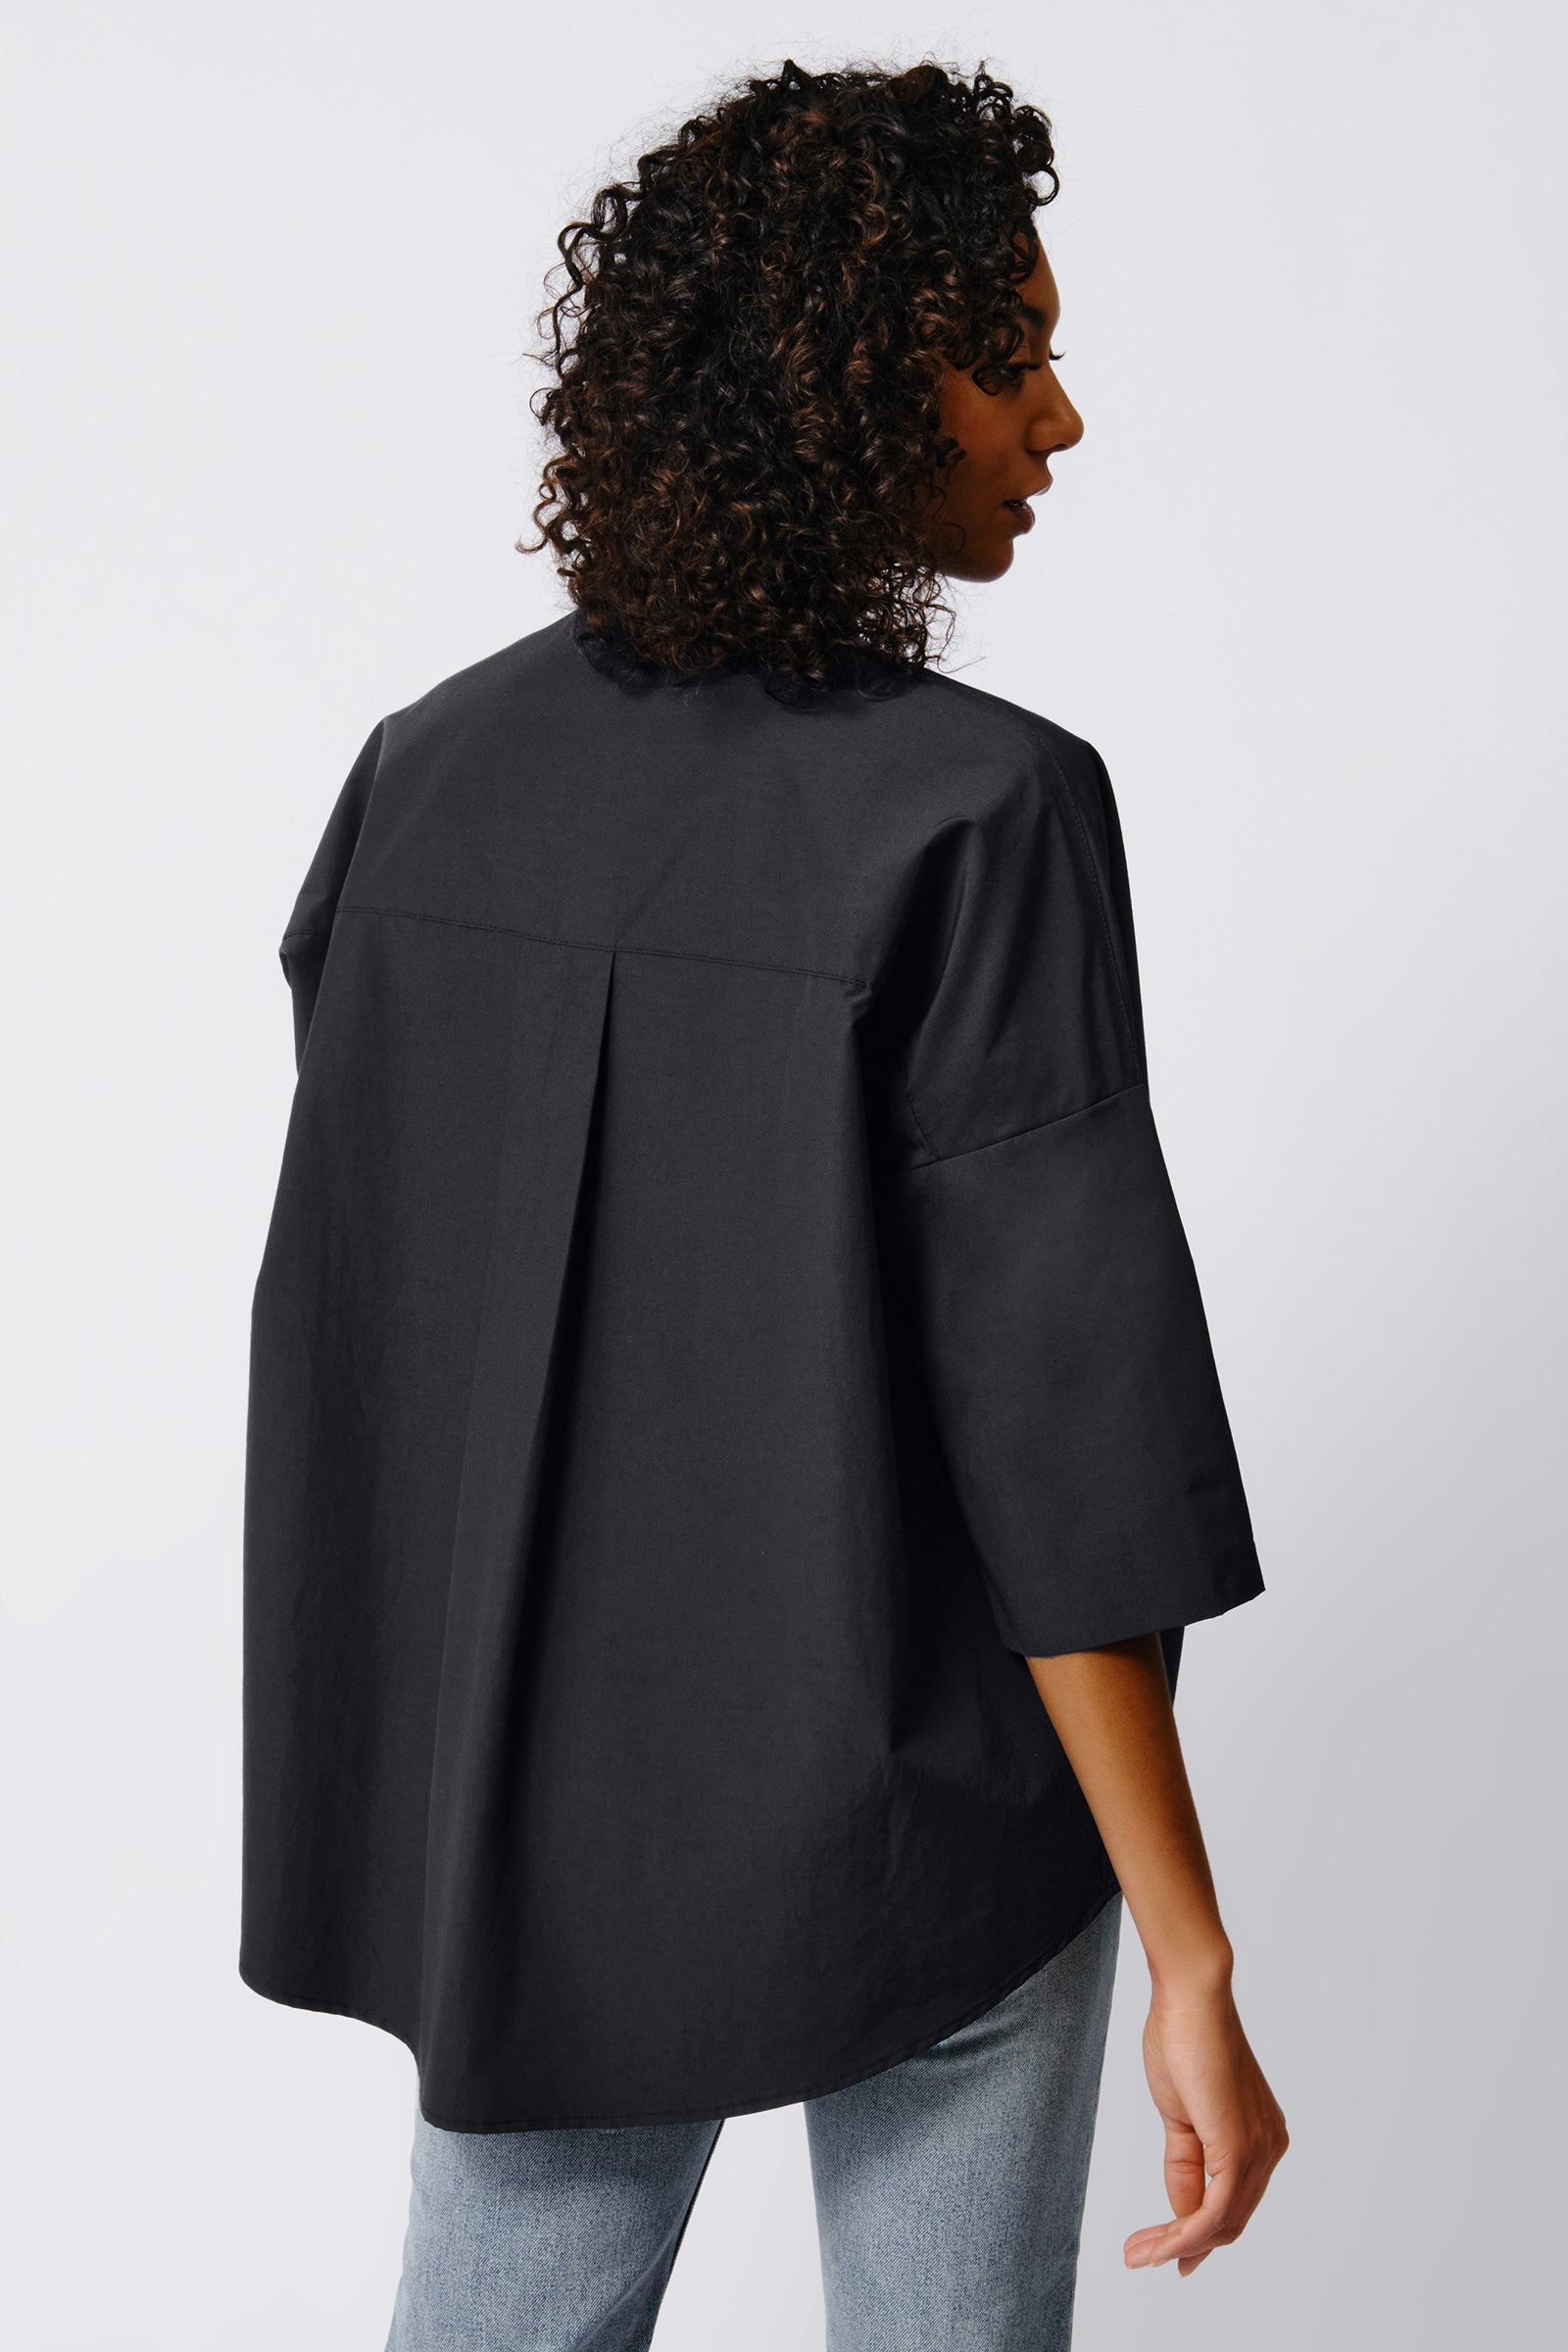 Kal Rieman Pleat Hem Kimono in Black Broadcloth on Model Front View Crop